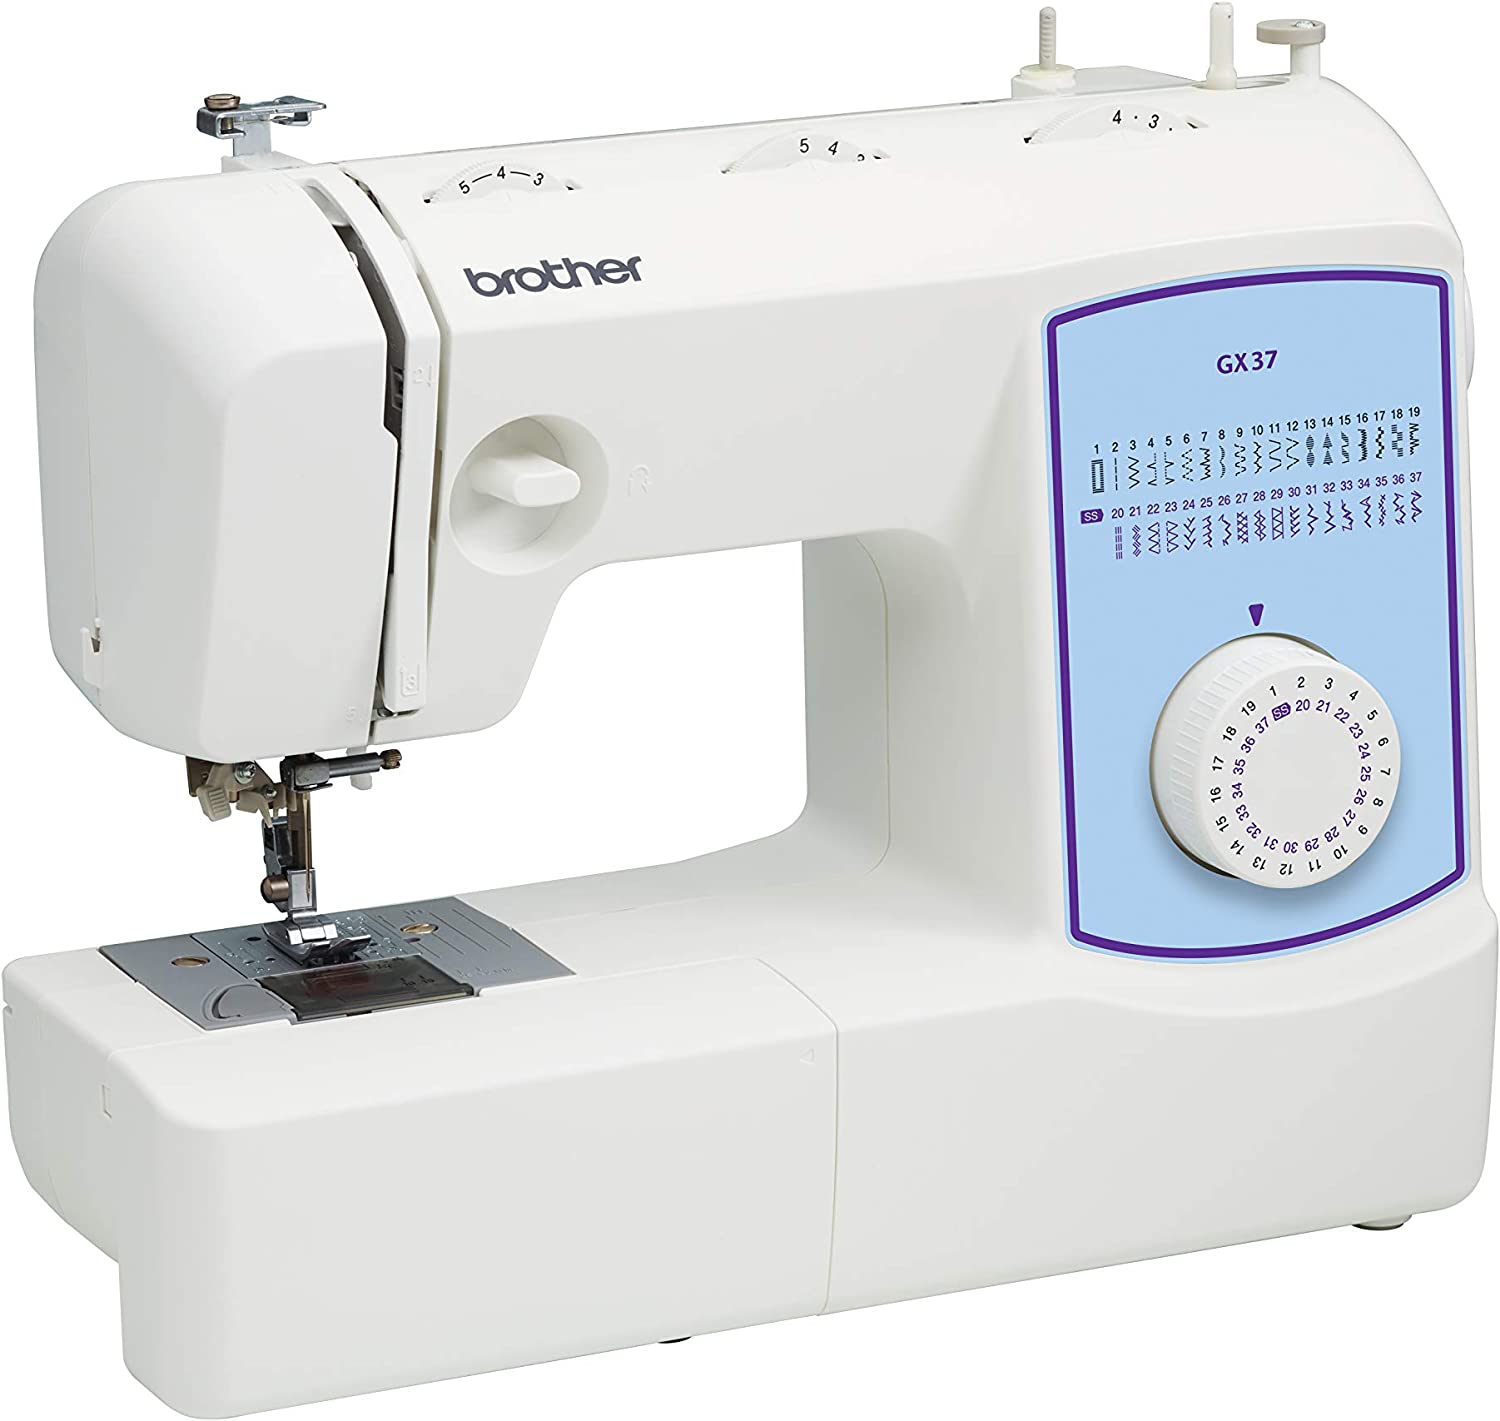 Brother GX37 Sewing Machine